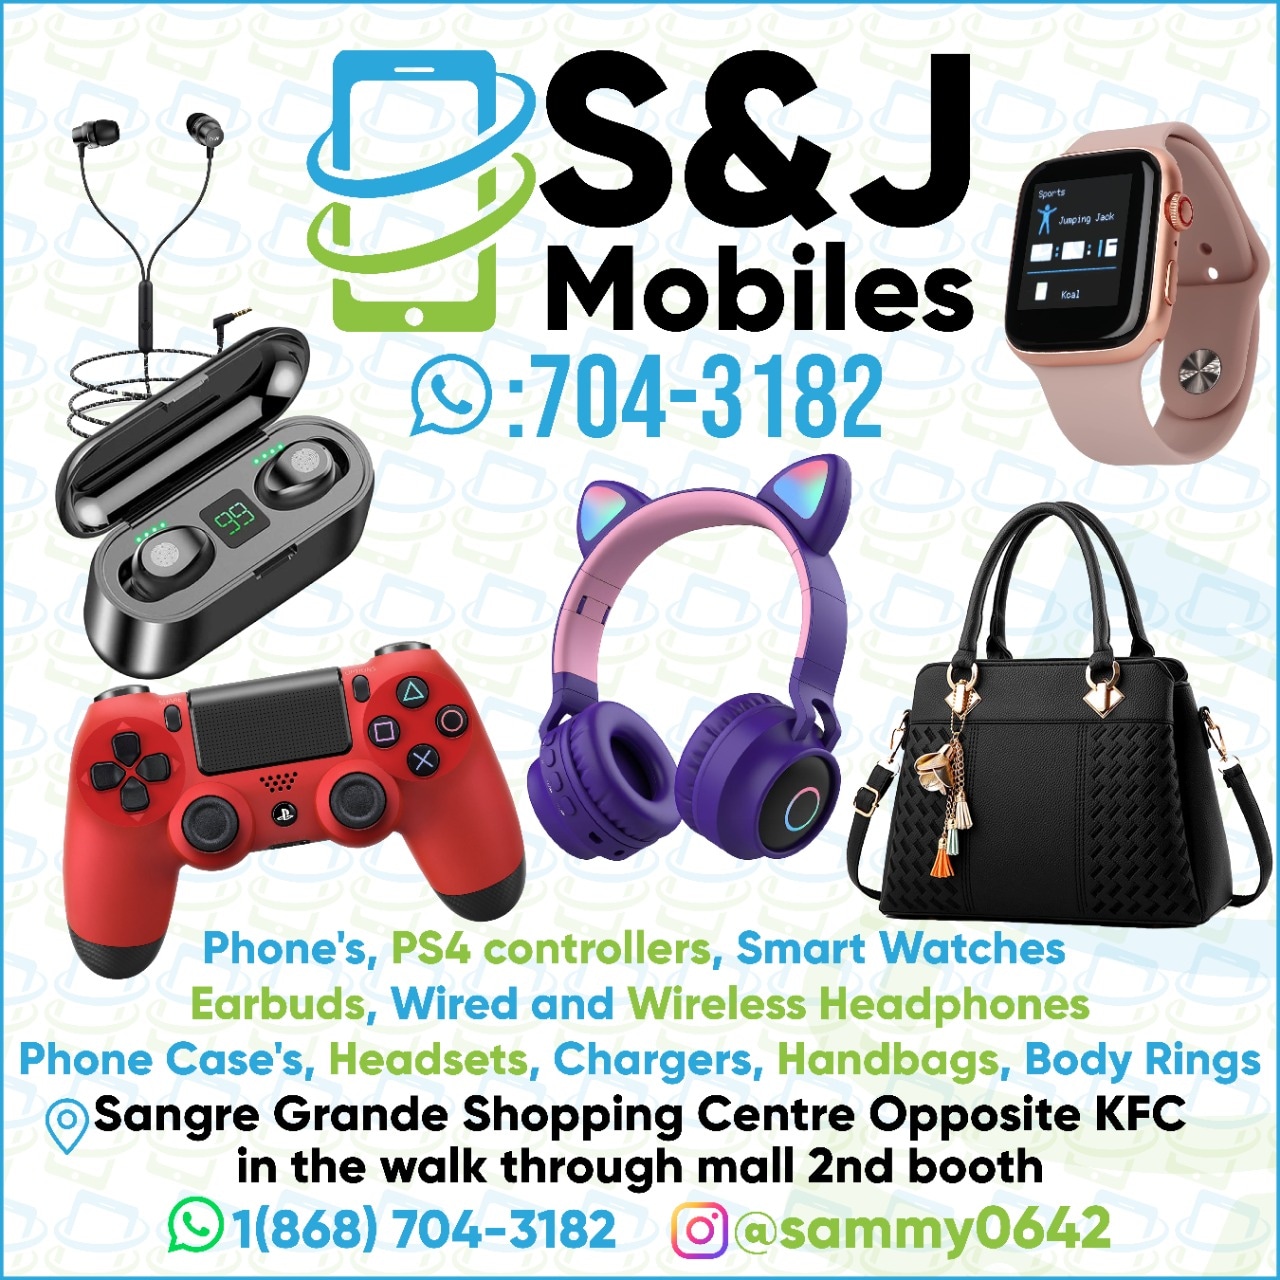 S&J Mobiles